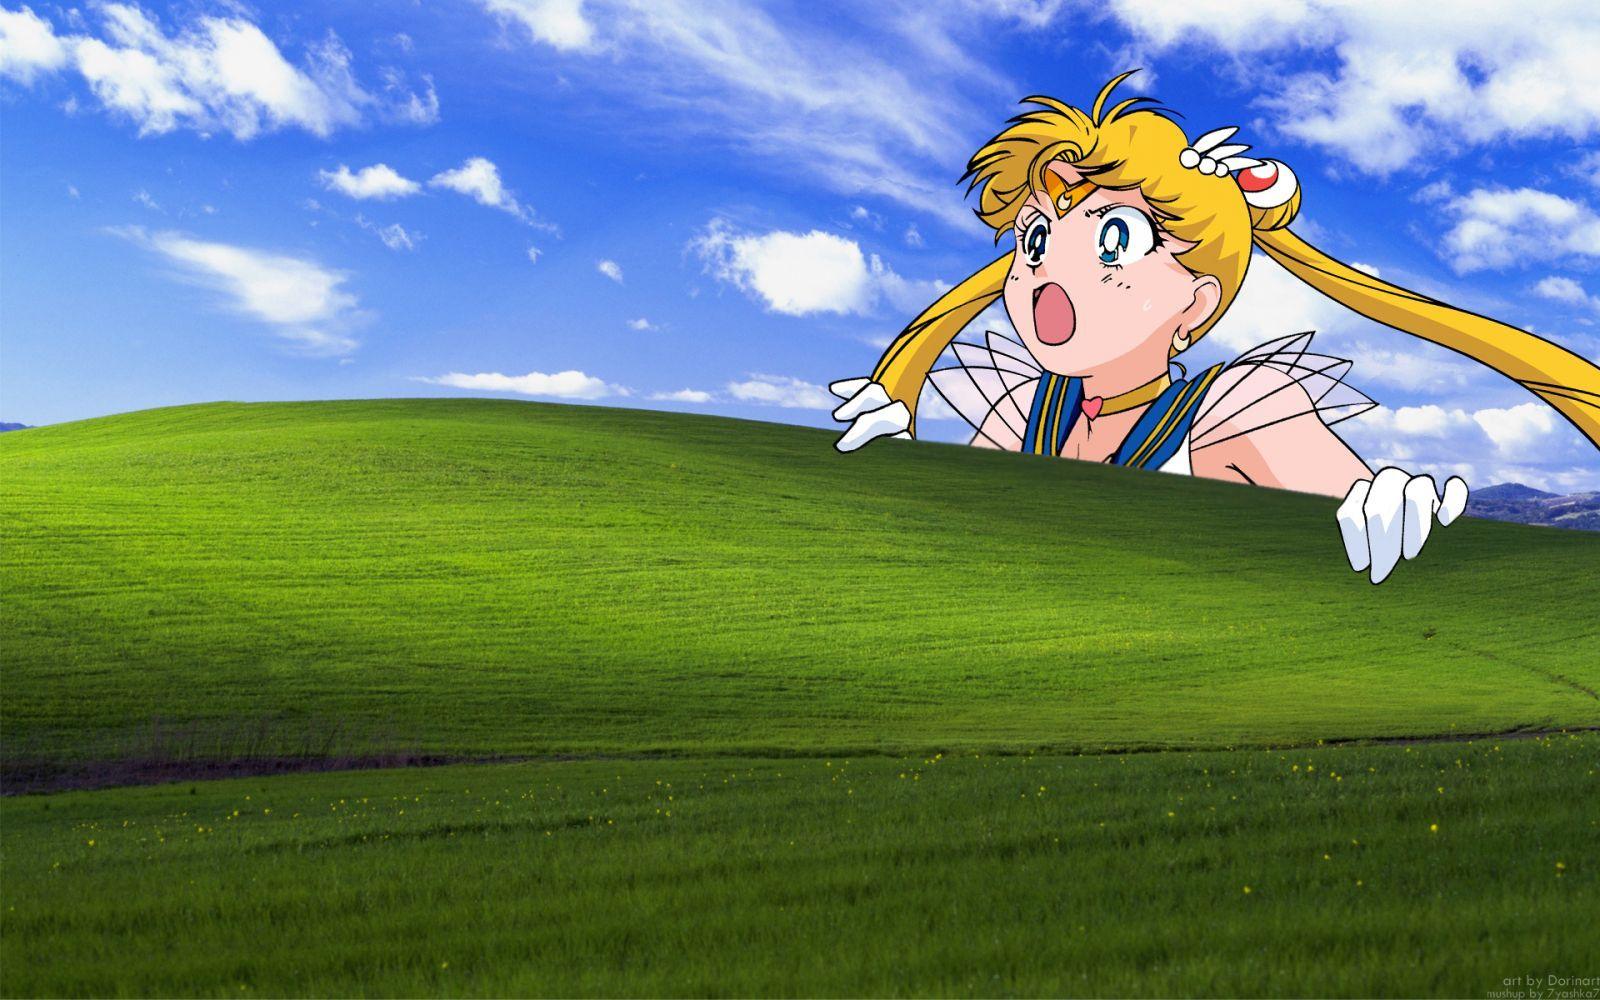 10 New Sailor Moon Desktop Backgrounds FULL HD 1080p For PC Background 2020   Sailor moon wallpaper Anime wallpaper Anime backgrounds wallpapers